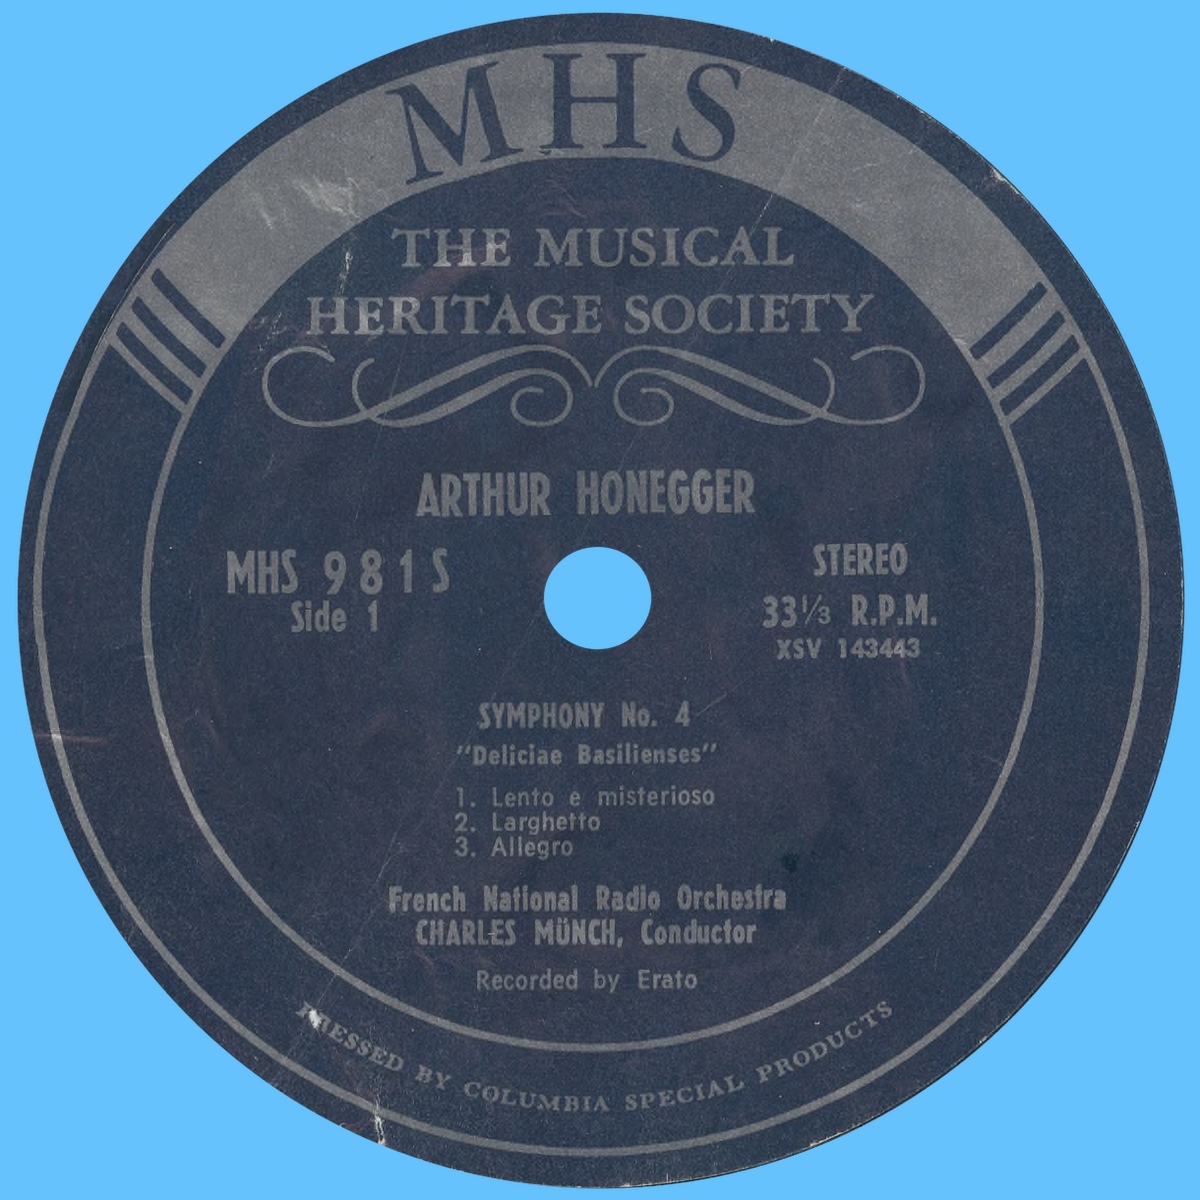 Étiquette recto du disque Musical Heritage Society MHS 981